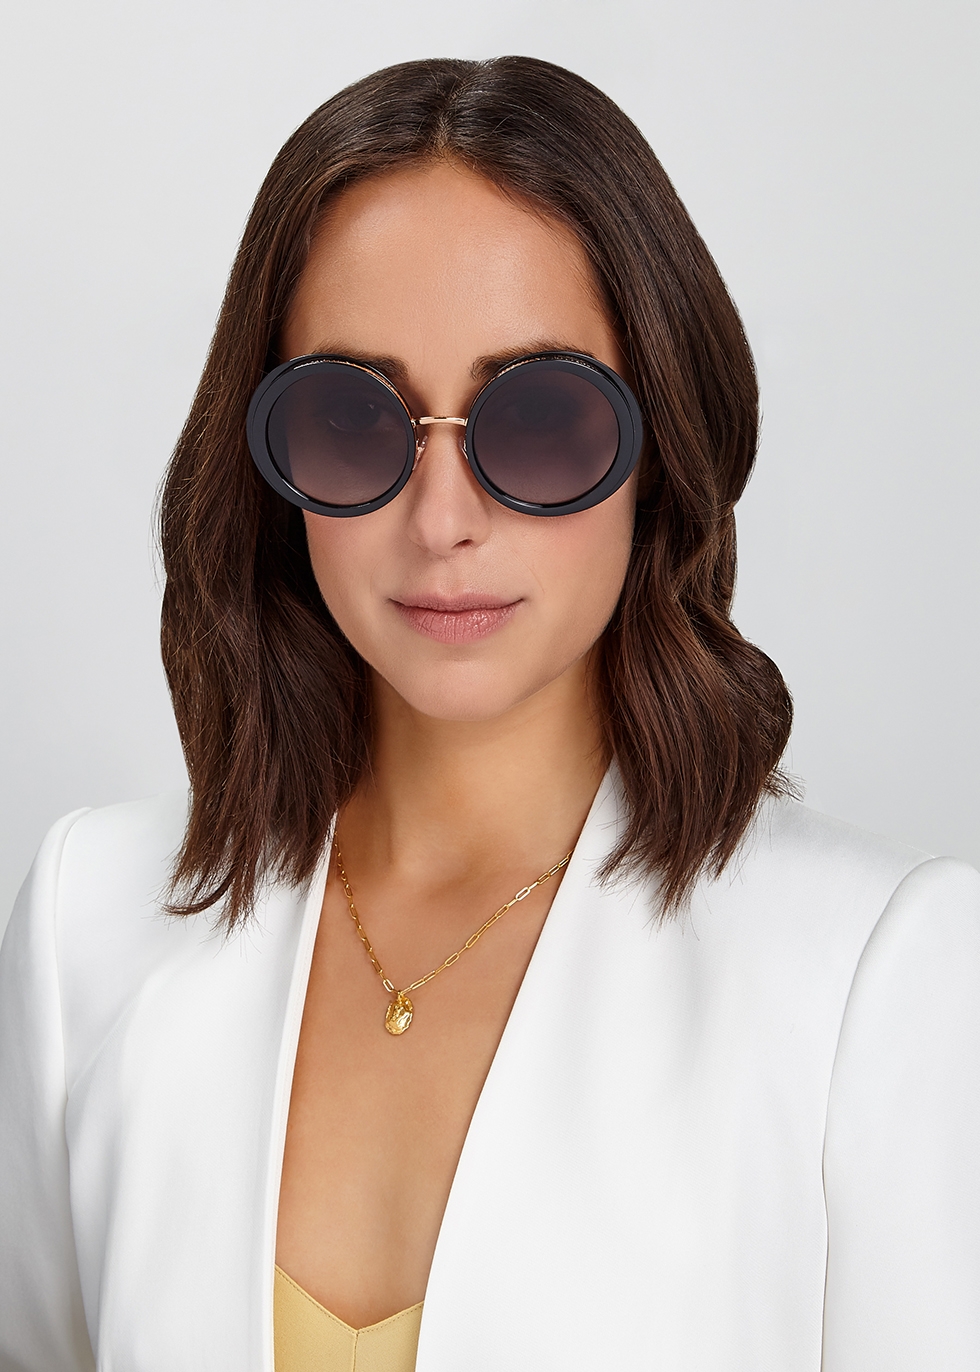 dolce and gabbana sunglasses womens